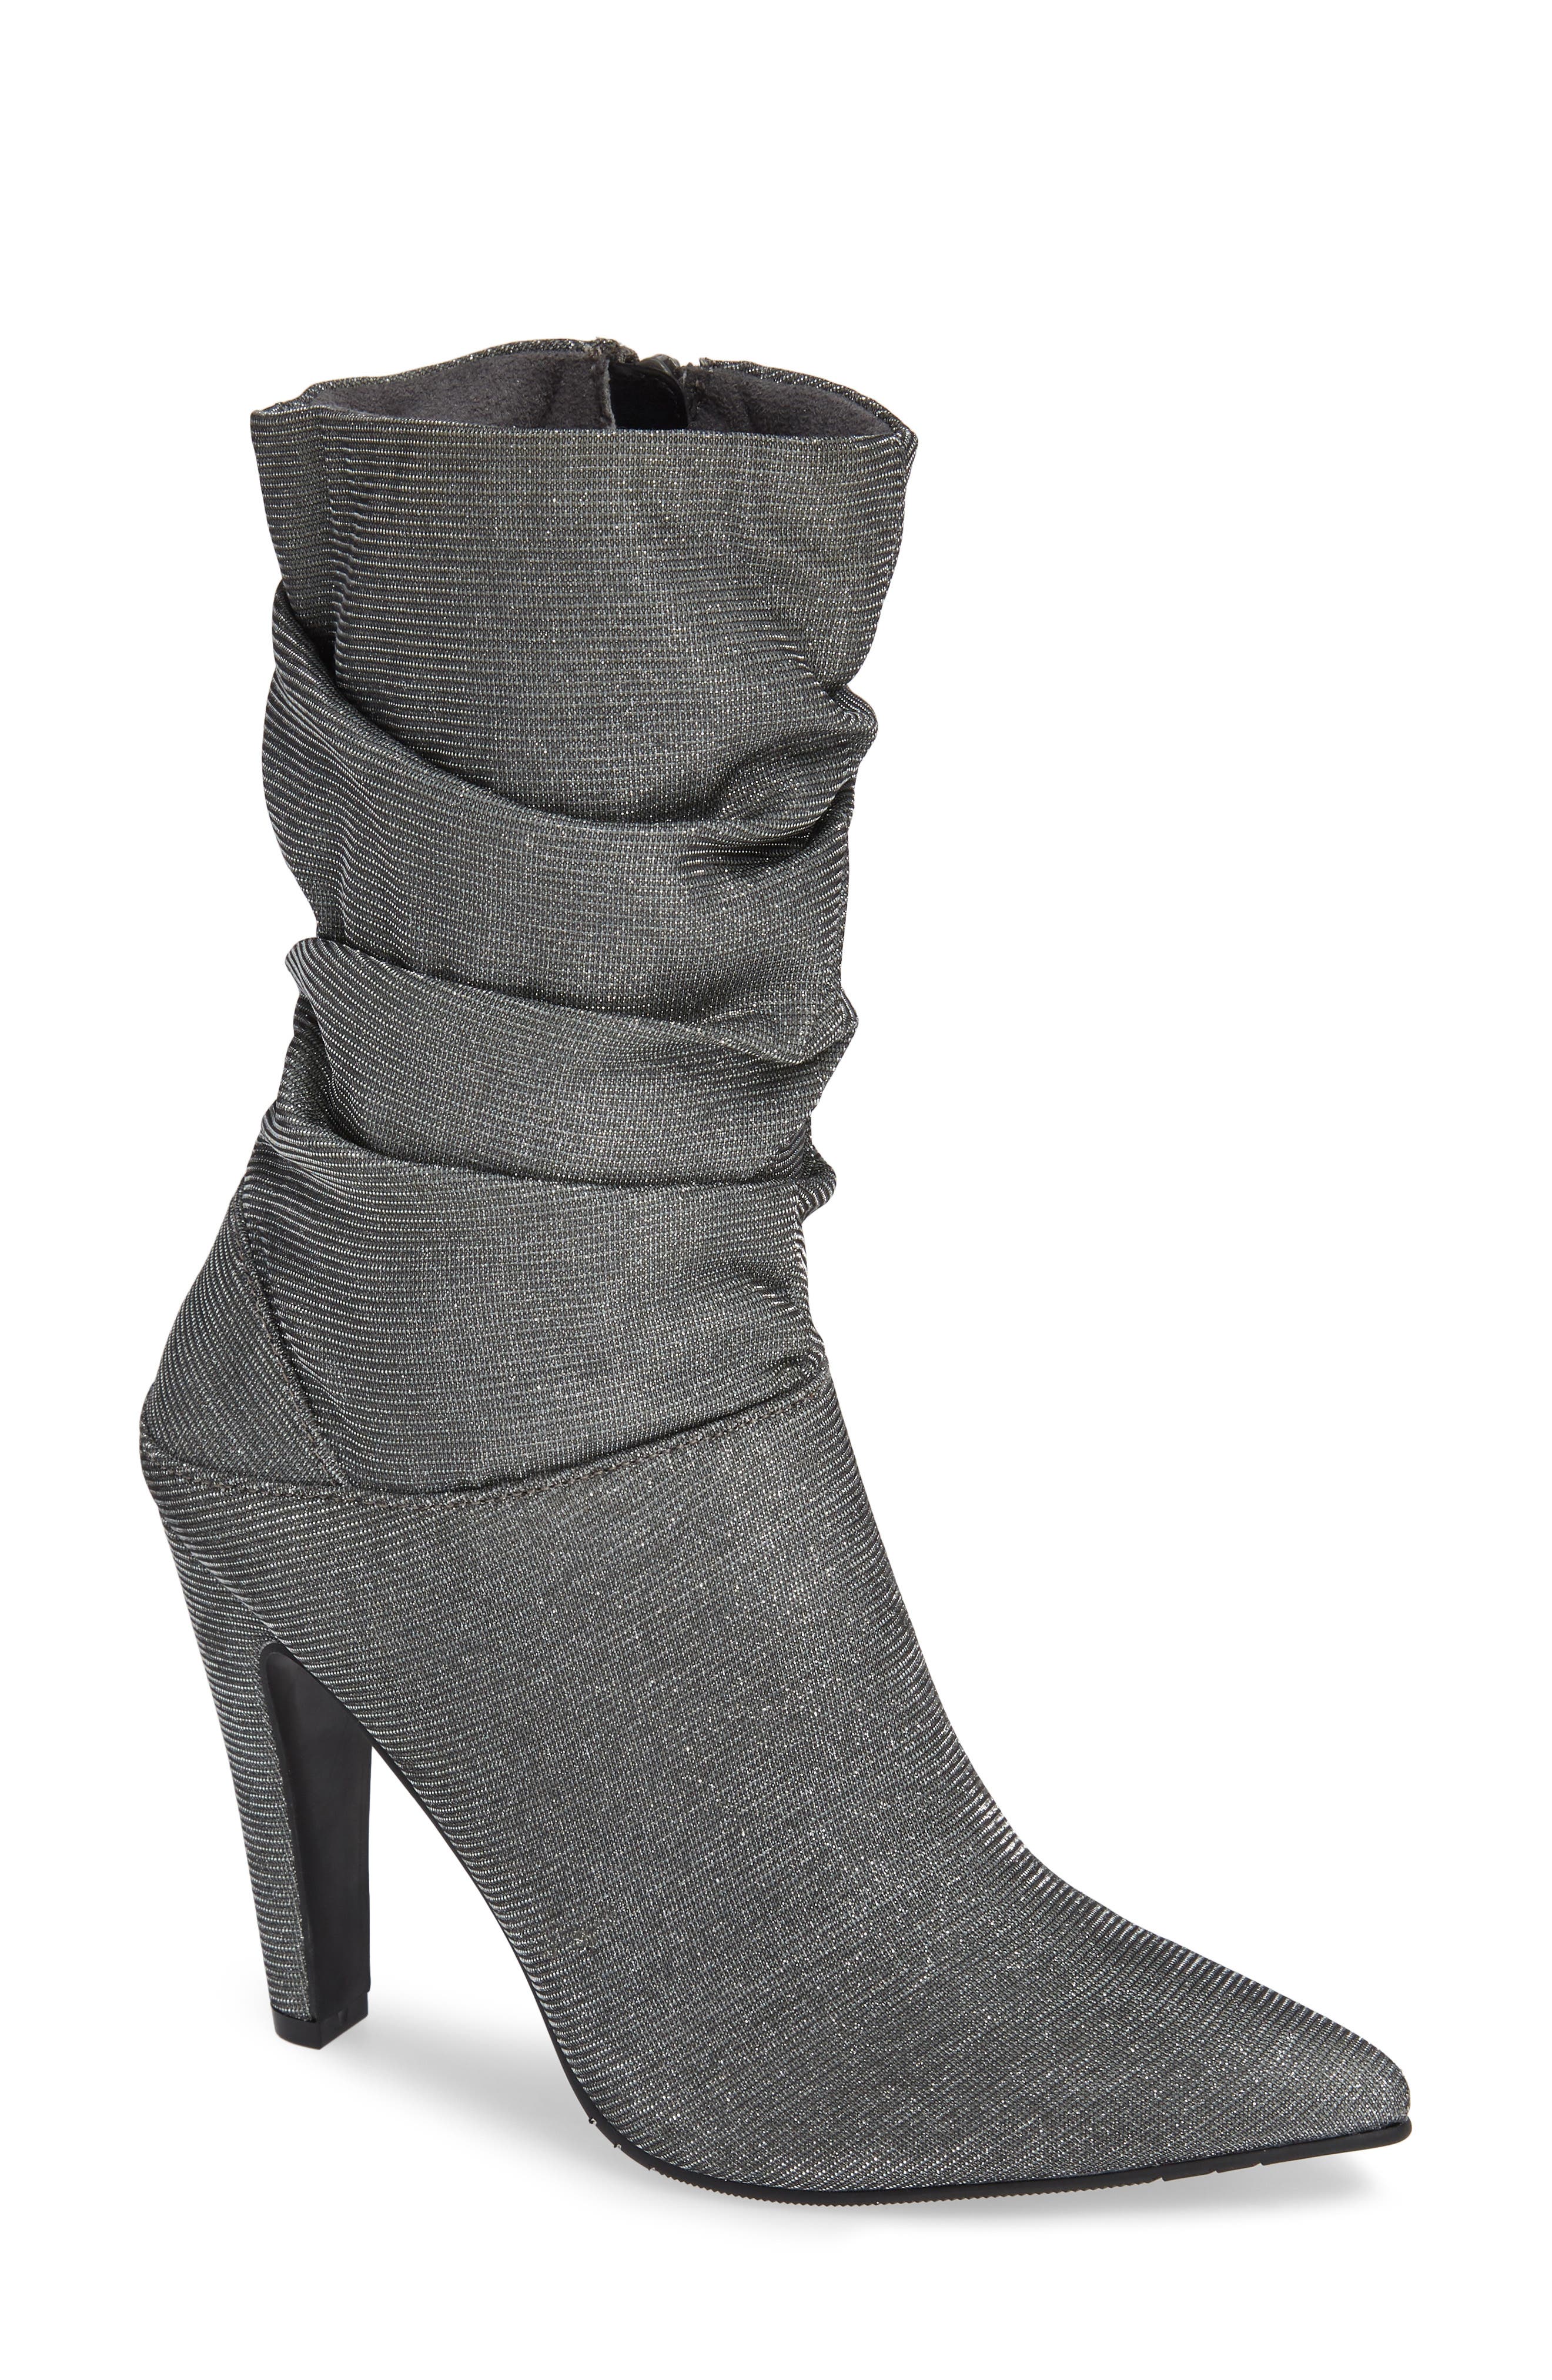 UPC 716142081301 product image for Women's Nina Darla Bootie, Size 6.5 M - Grey | upcitemdb.com